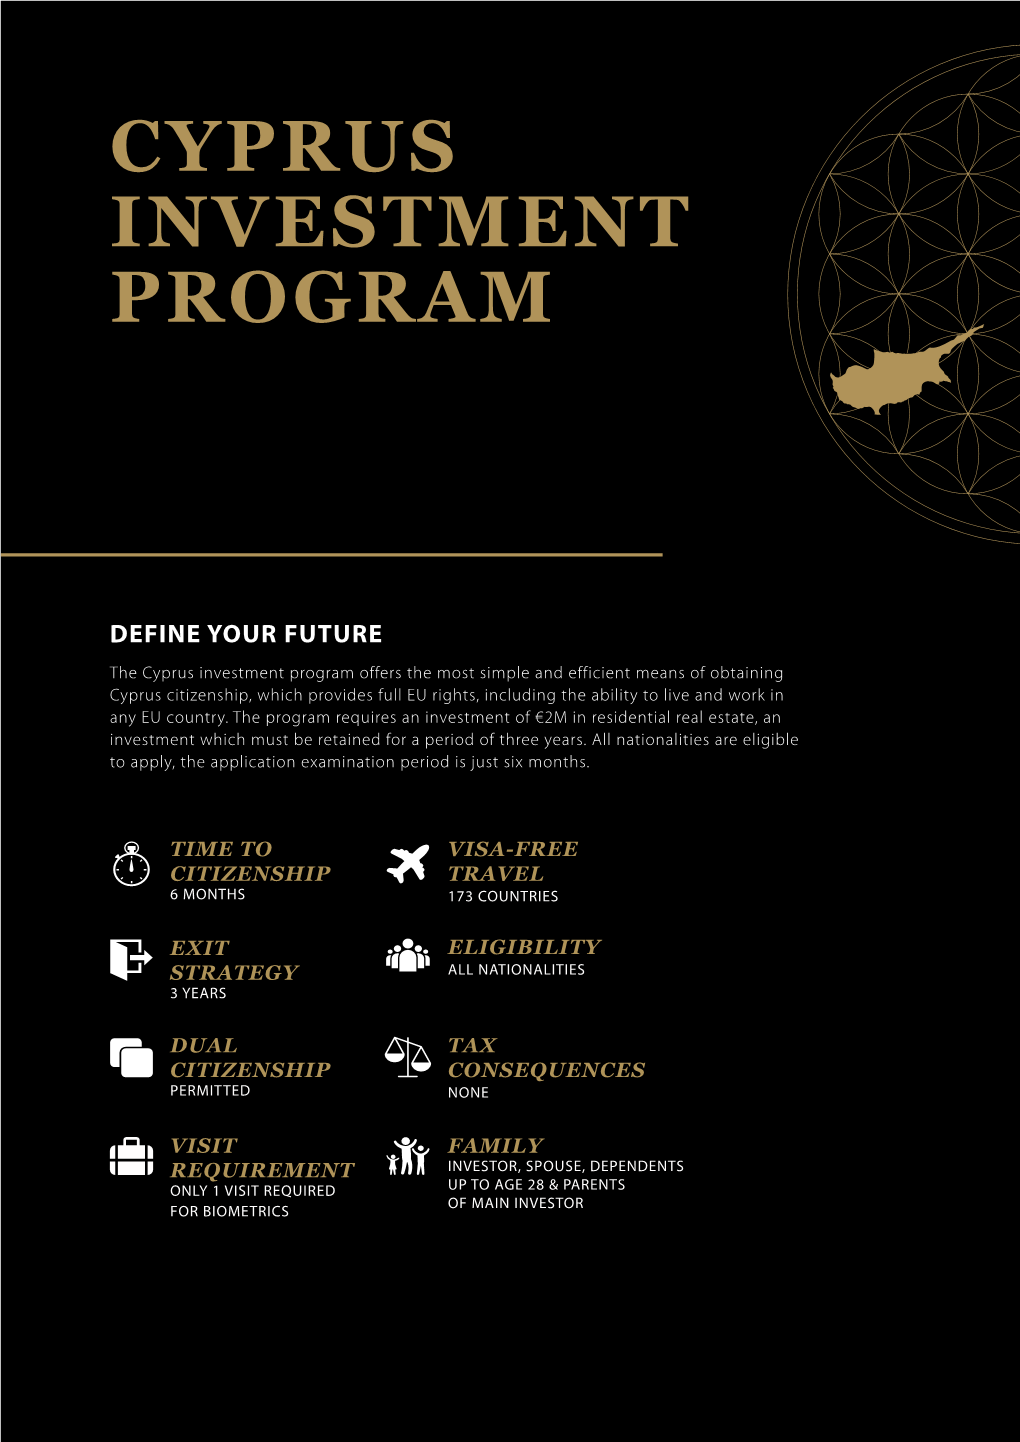 Cyprus Investment Program